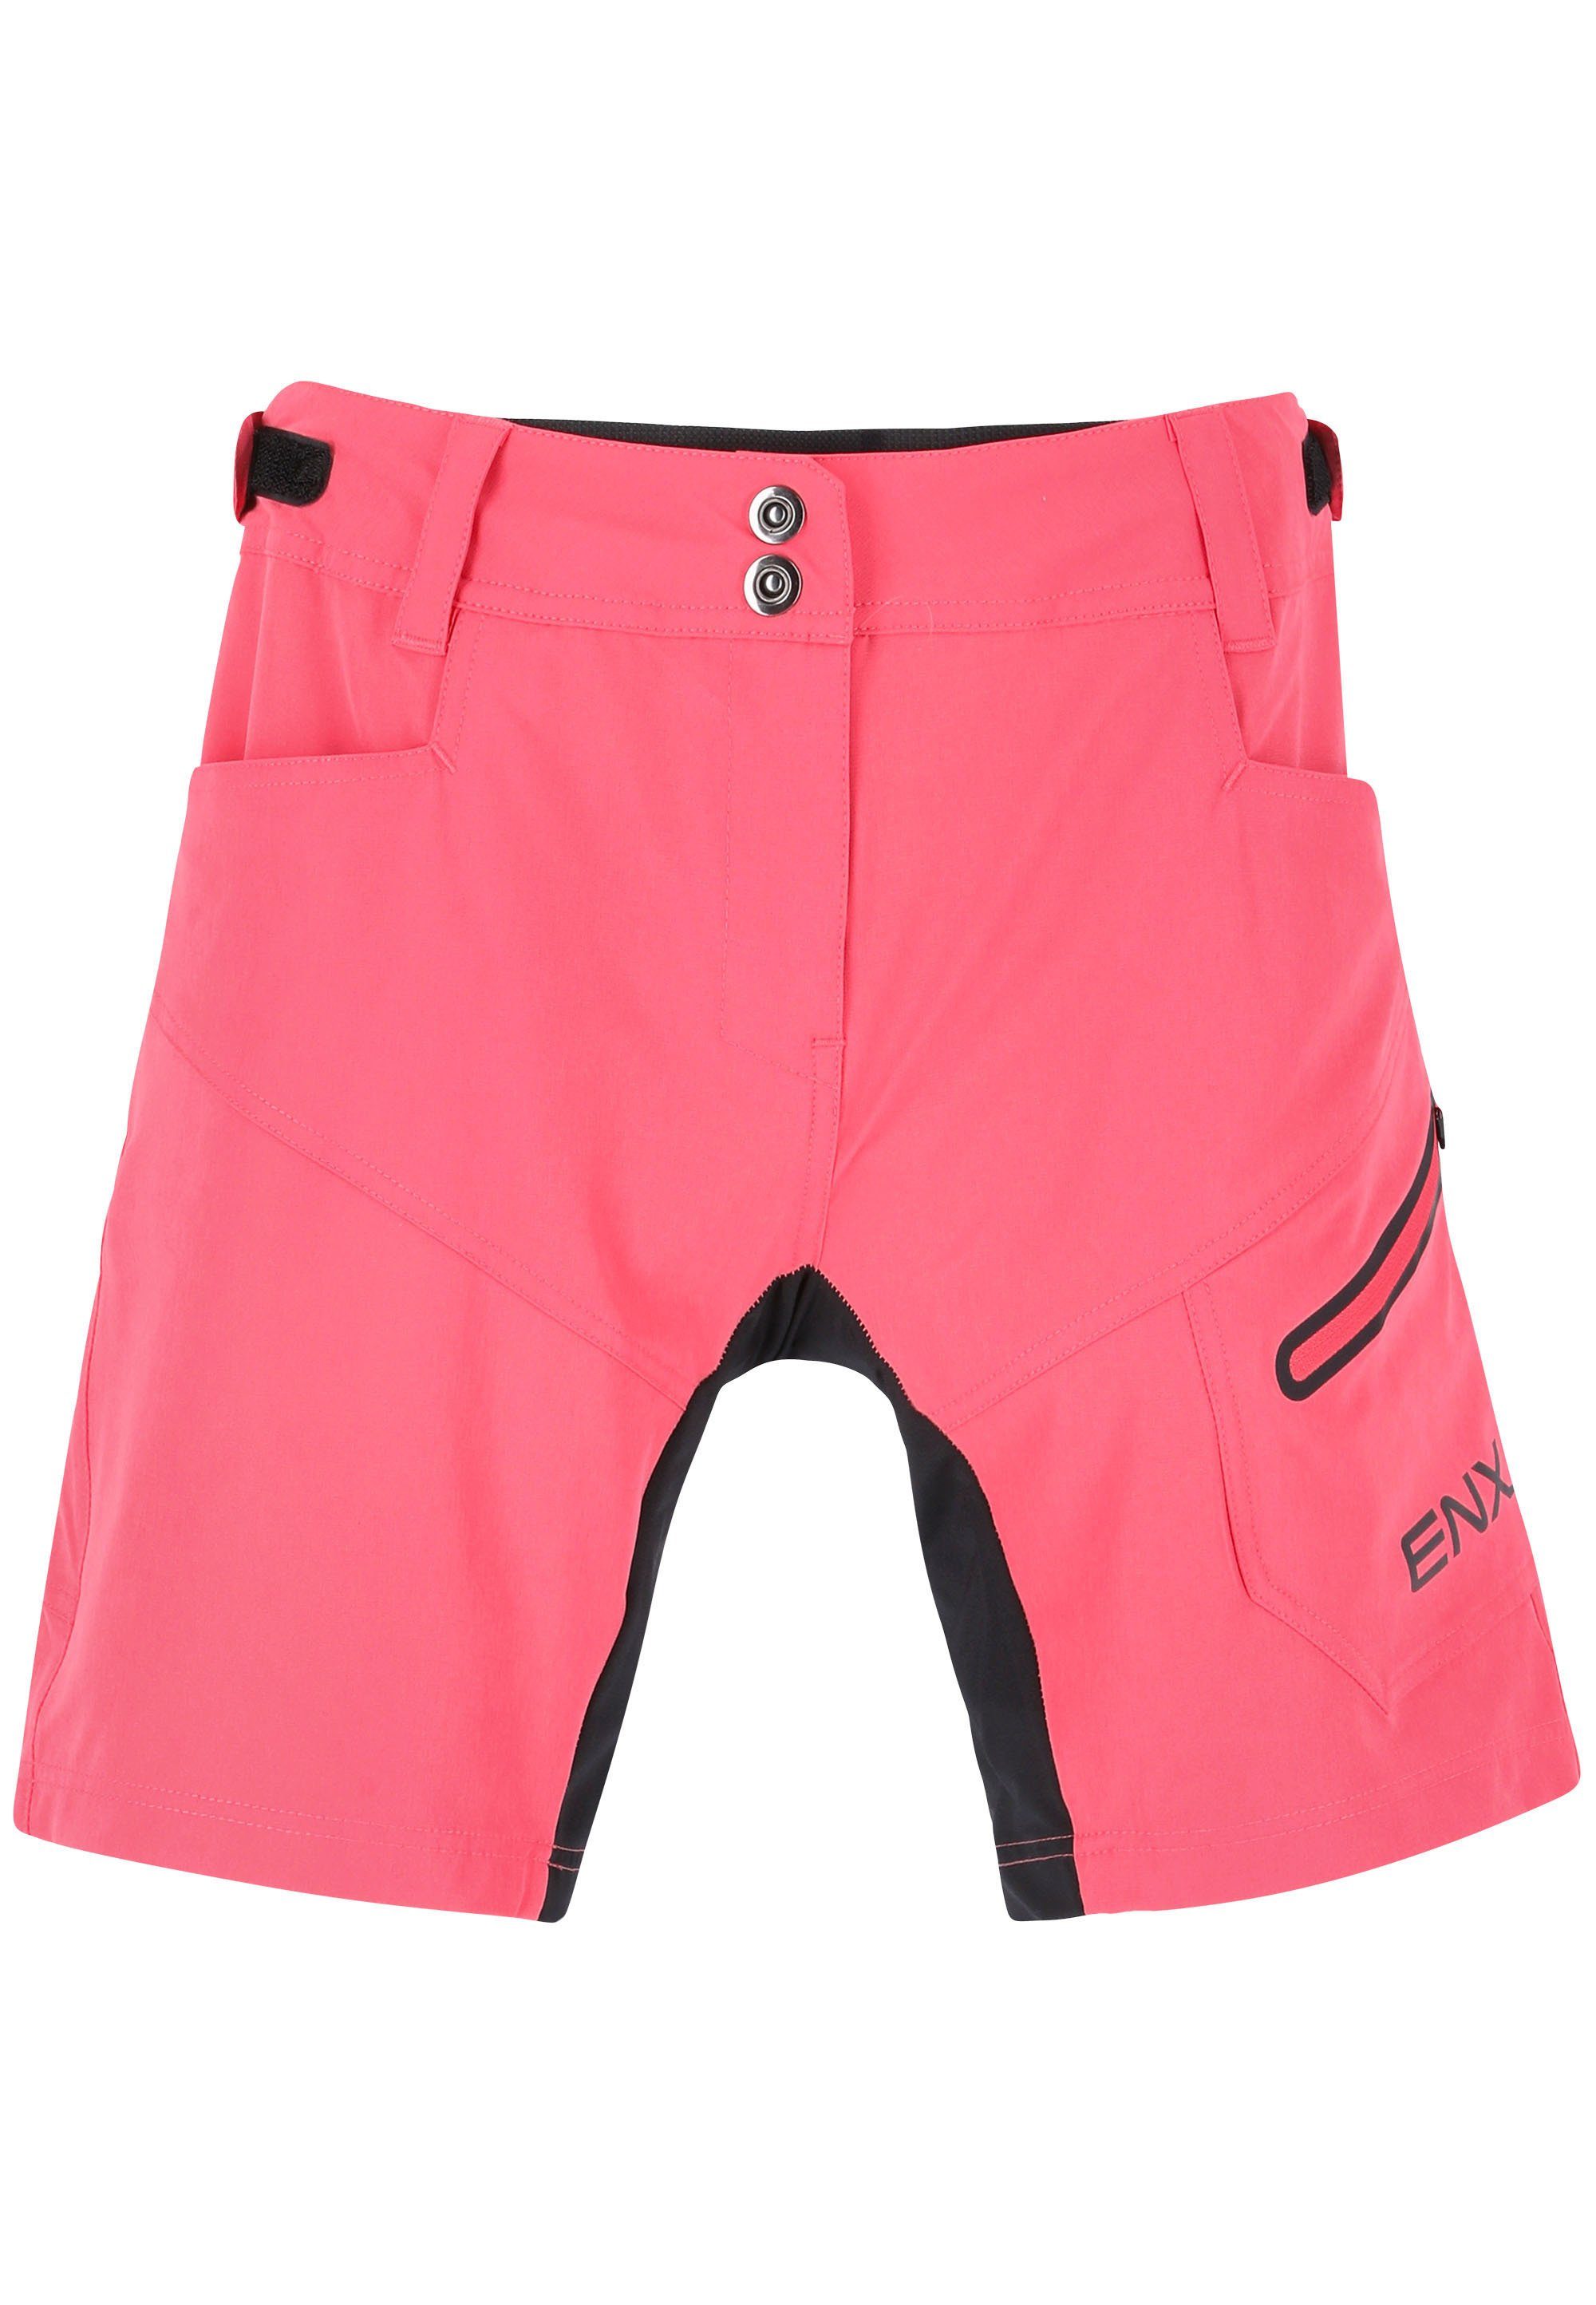 ENDURANCE Radhose Jamilla W 2 1 Shorts mit rosa in herausnehmbarer Innen-Tights